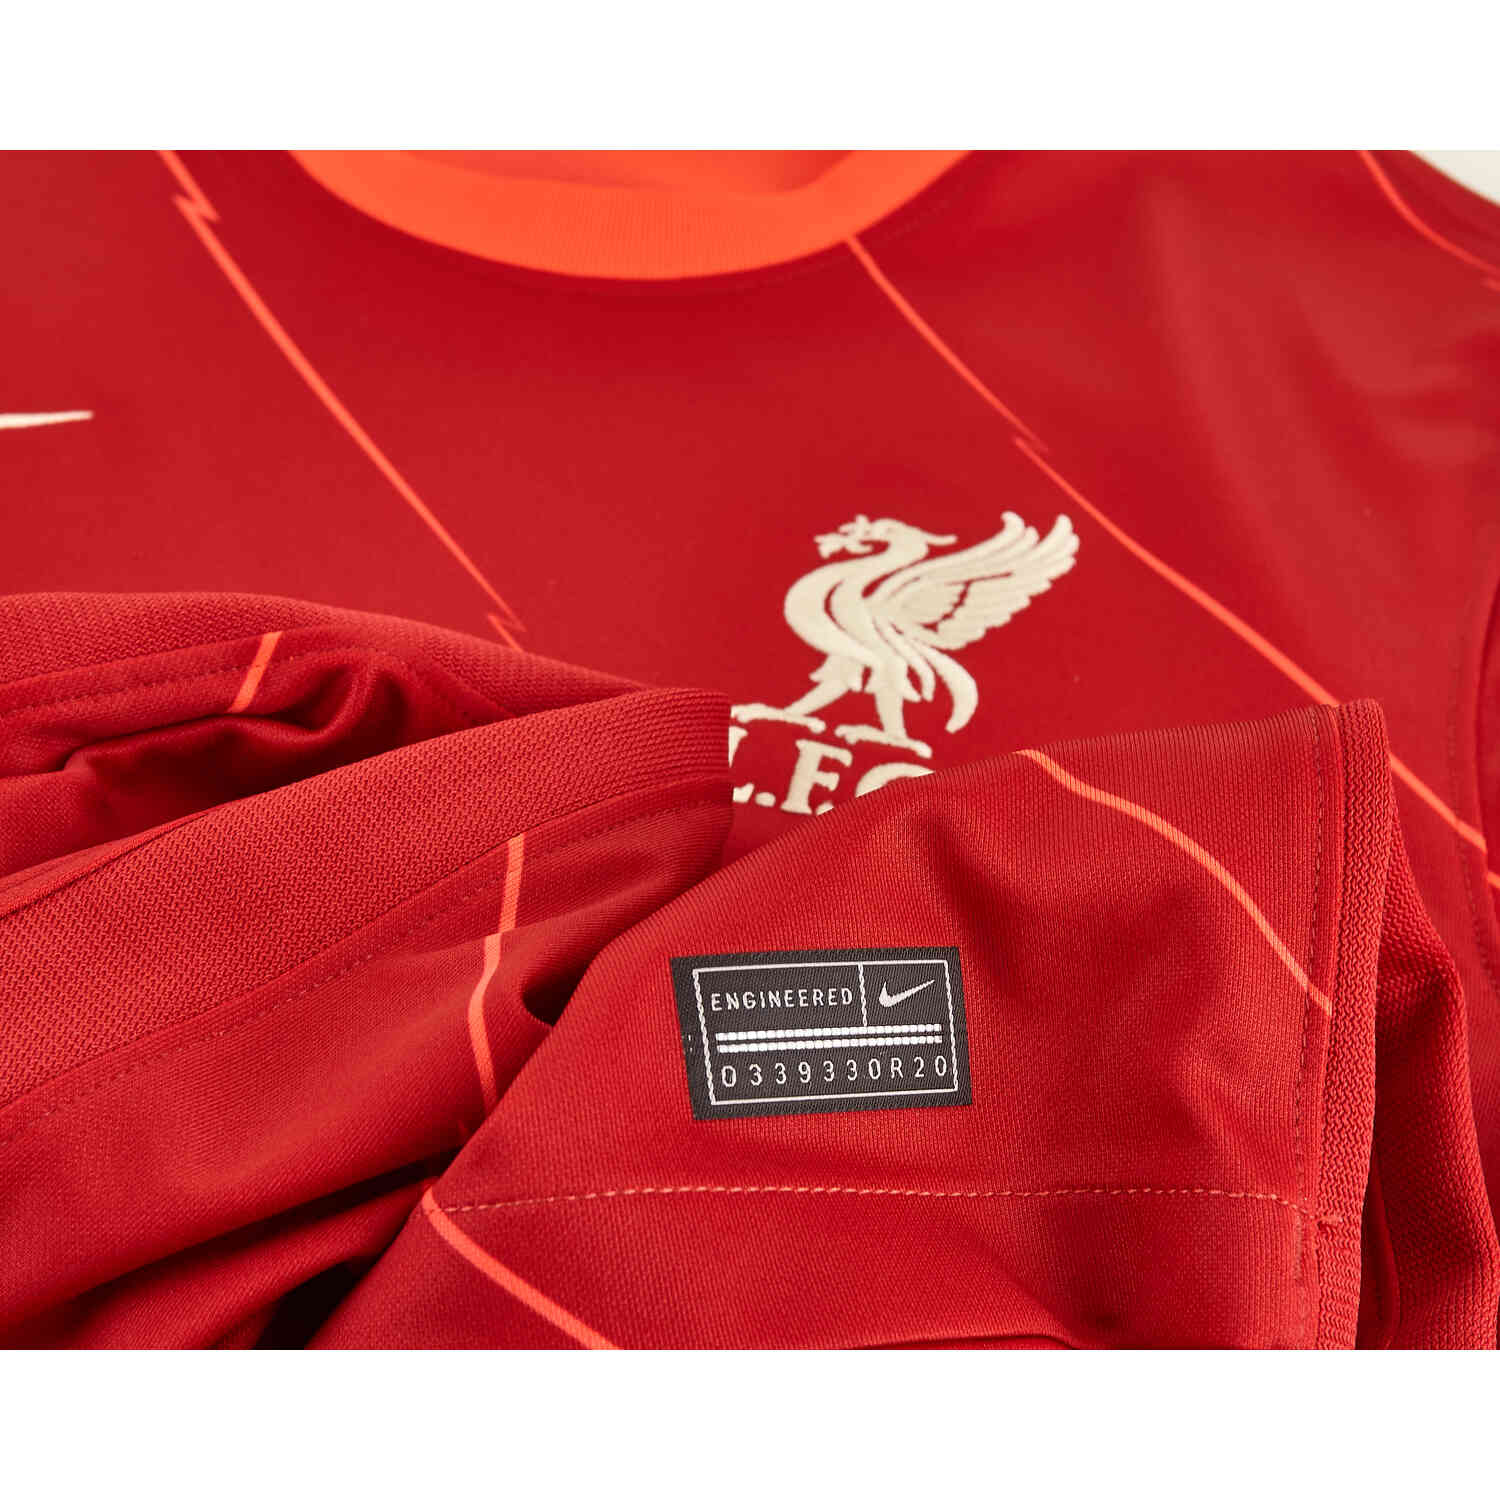 2021/22 Nike Luis Diaz Liverpool Away Jersey - SoccerPro